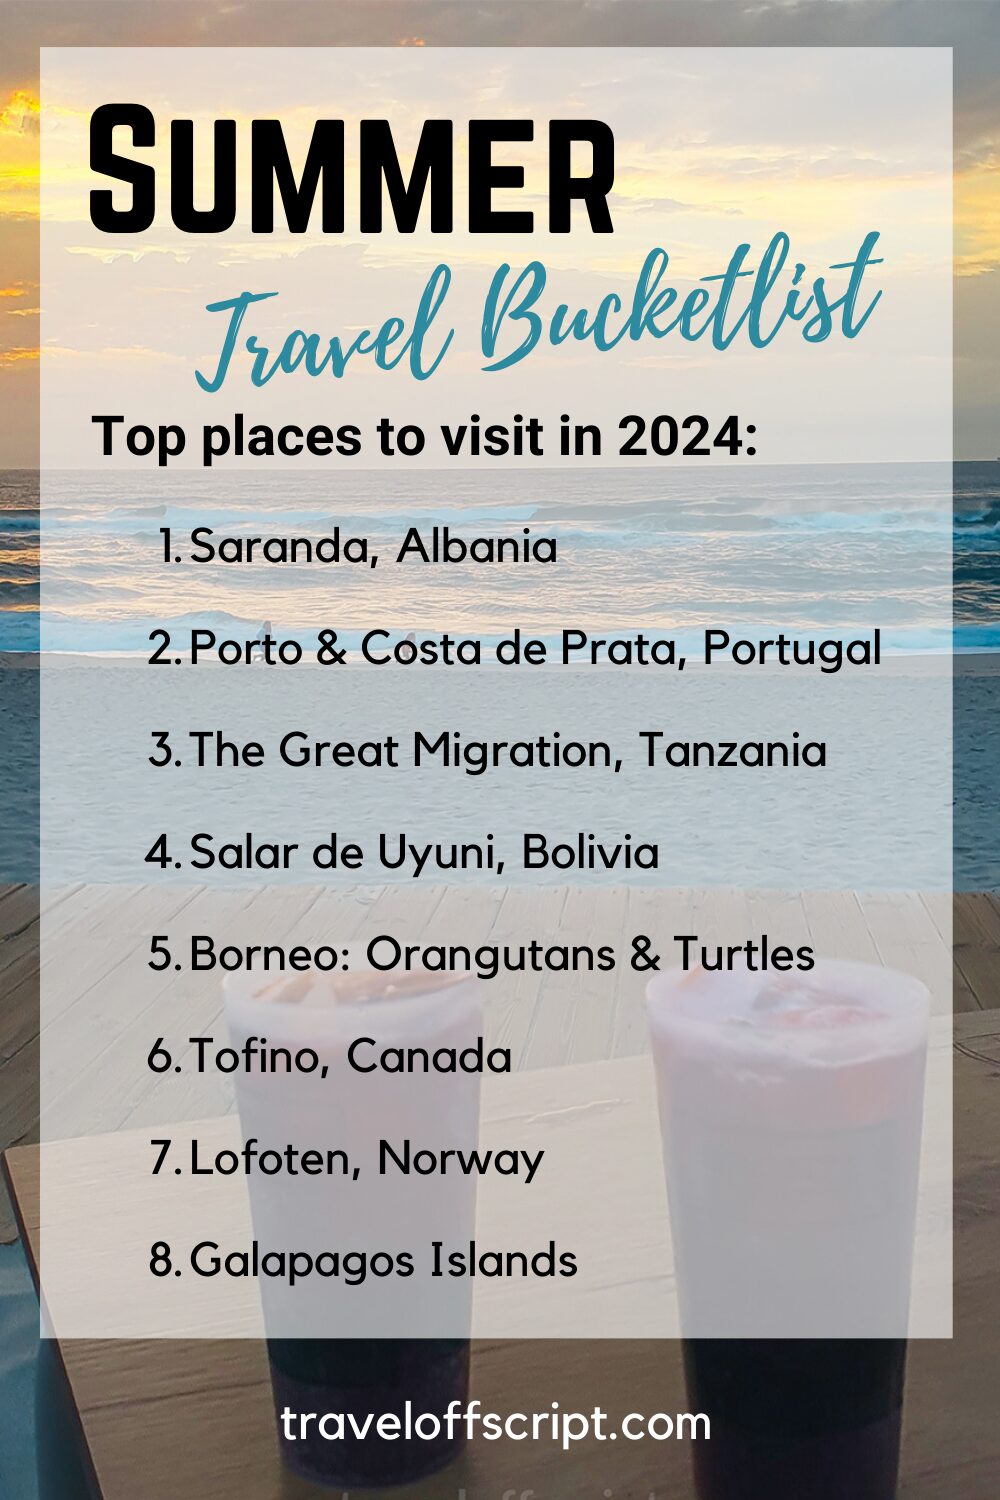 Summer travel bucketlist 2024 pinterest